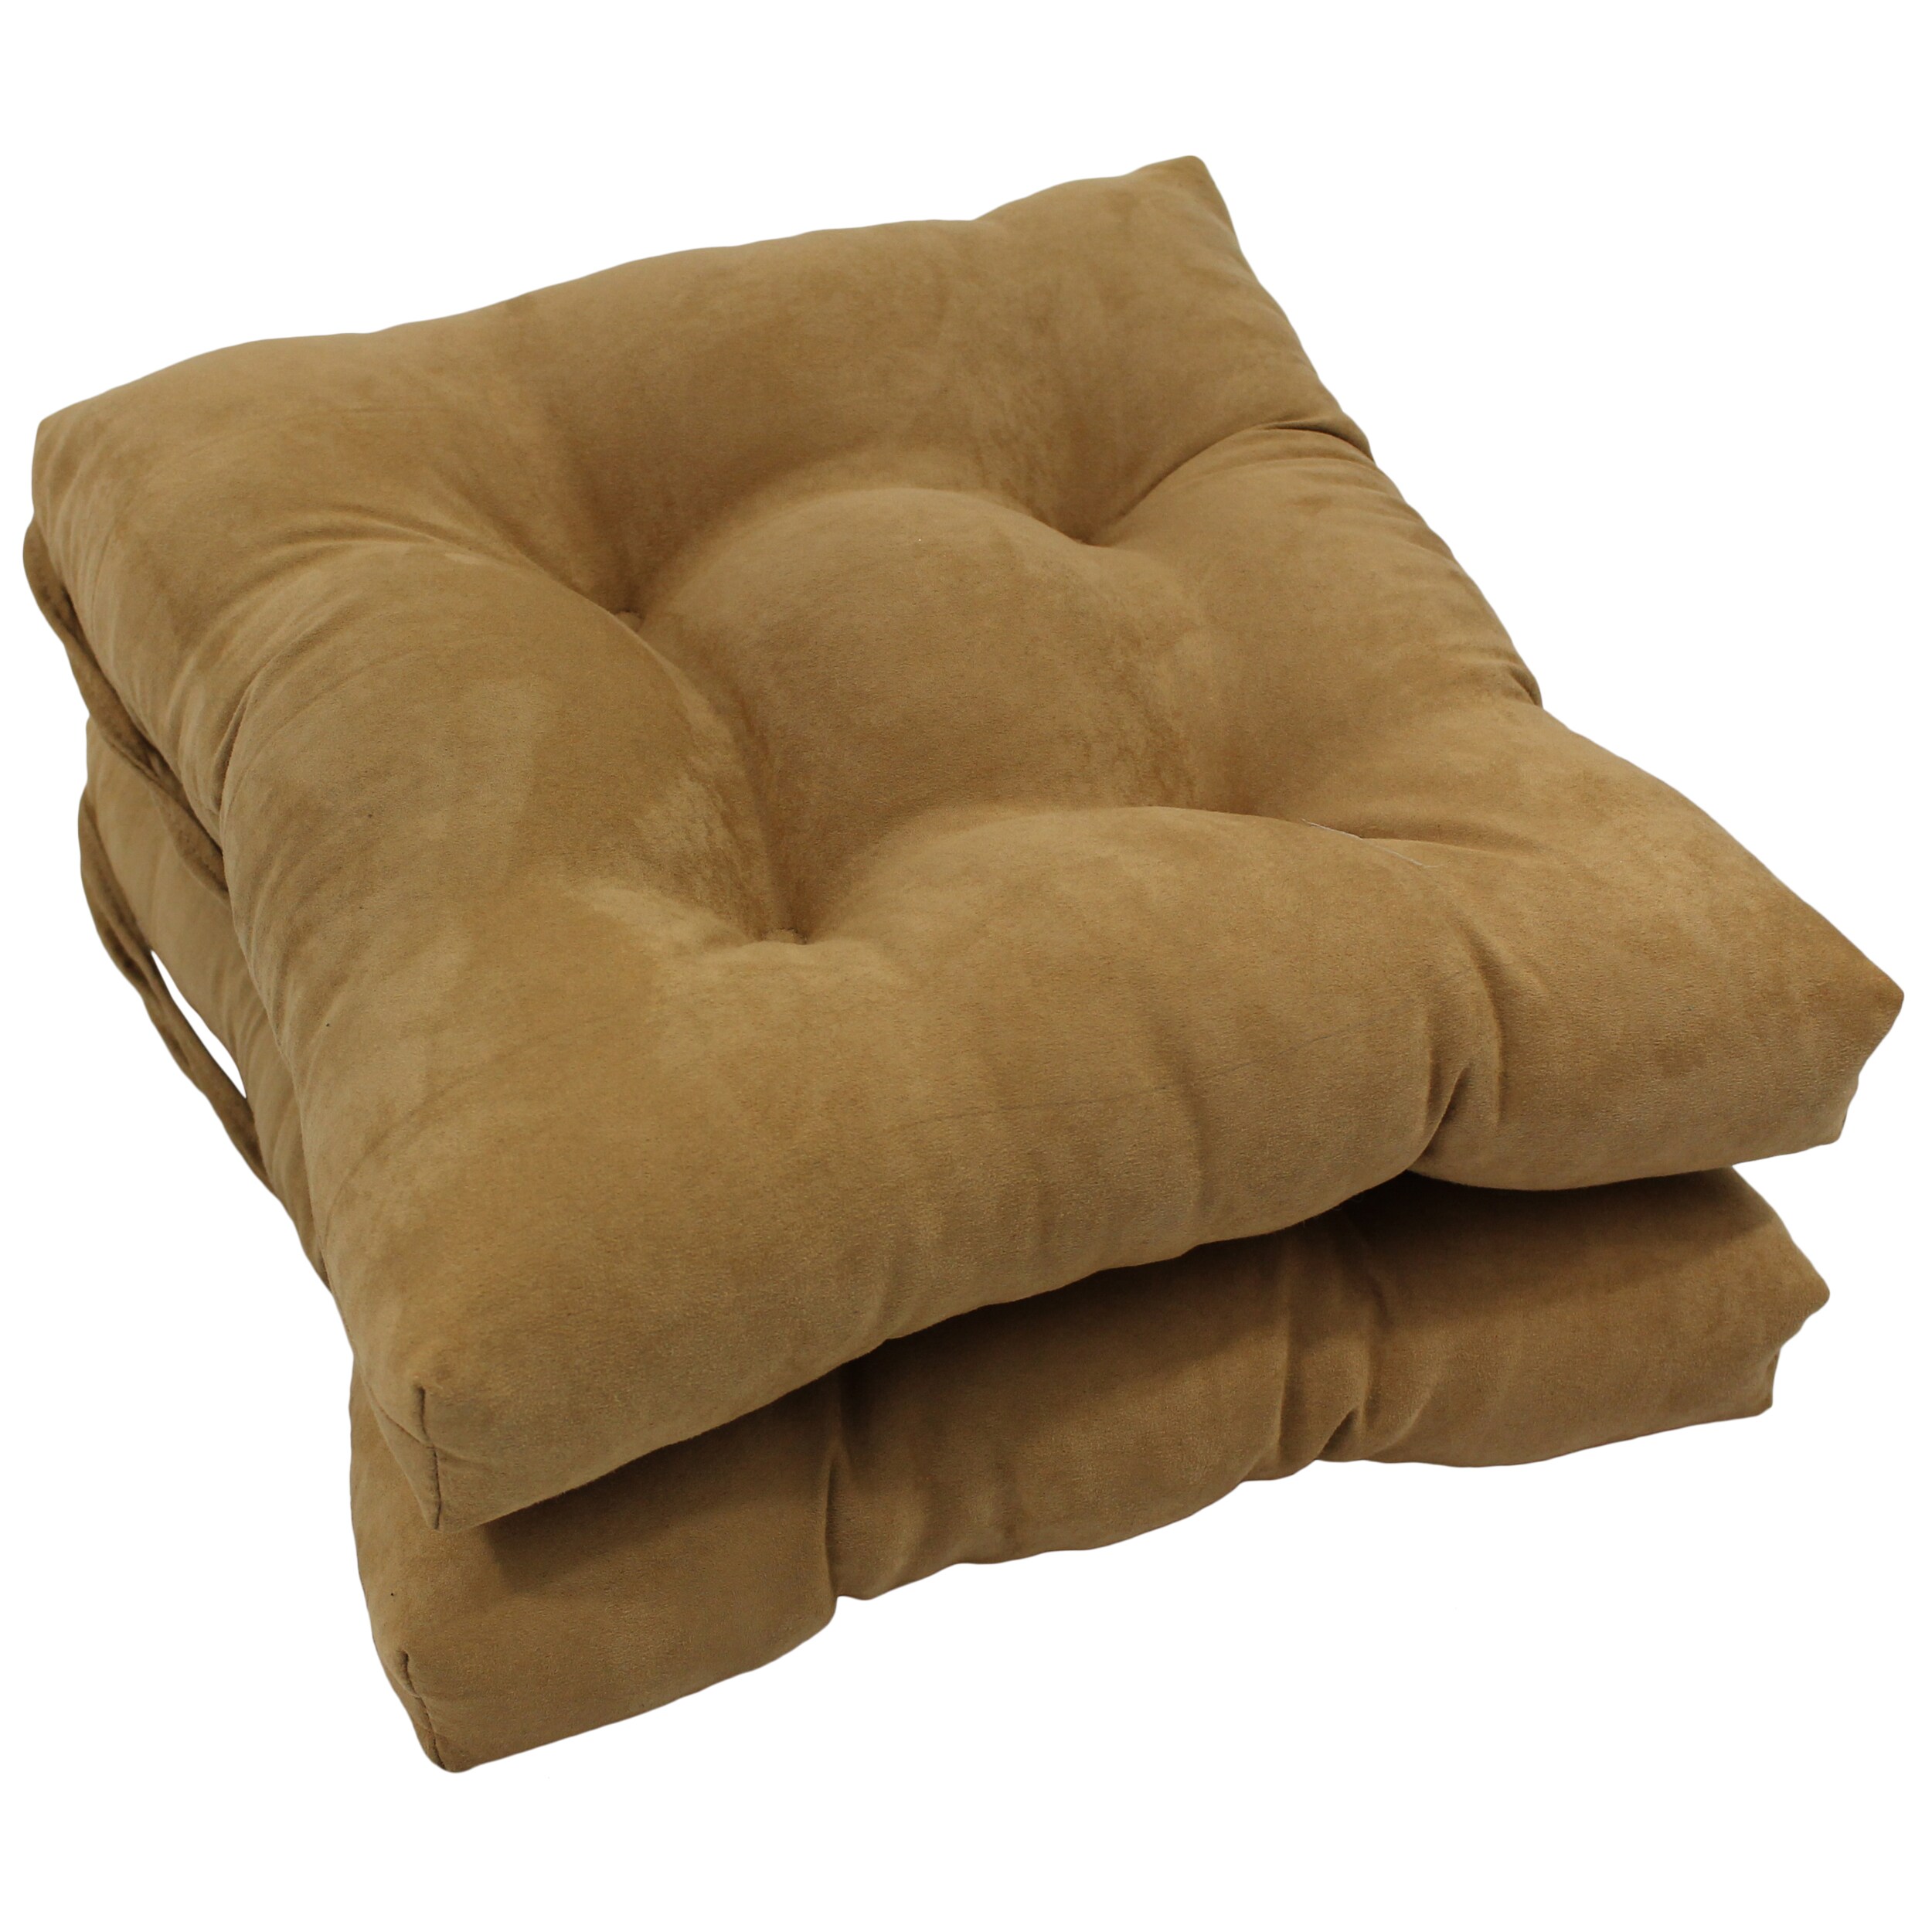 Cushions Chairs, U-shape Chair Cushion, U-shape Seat Cushion